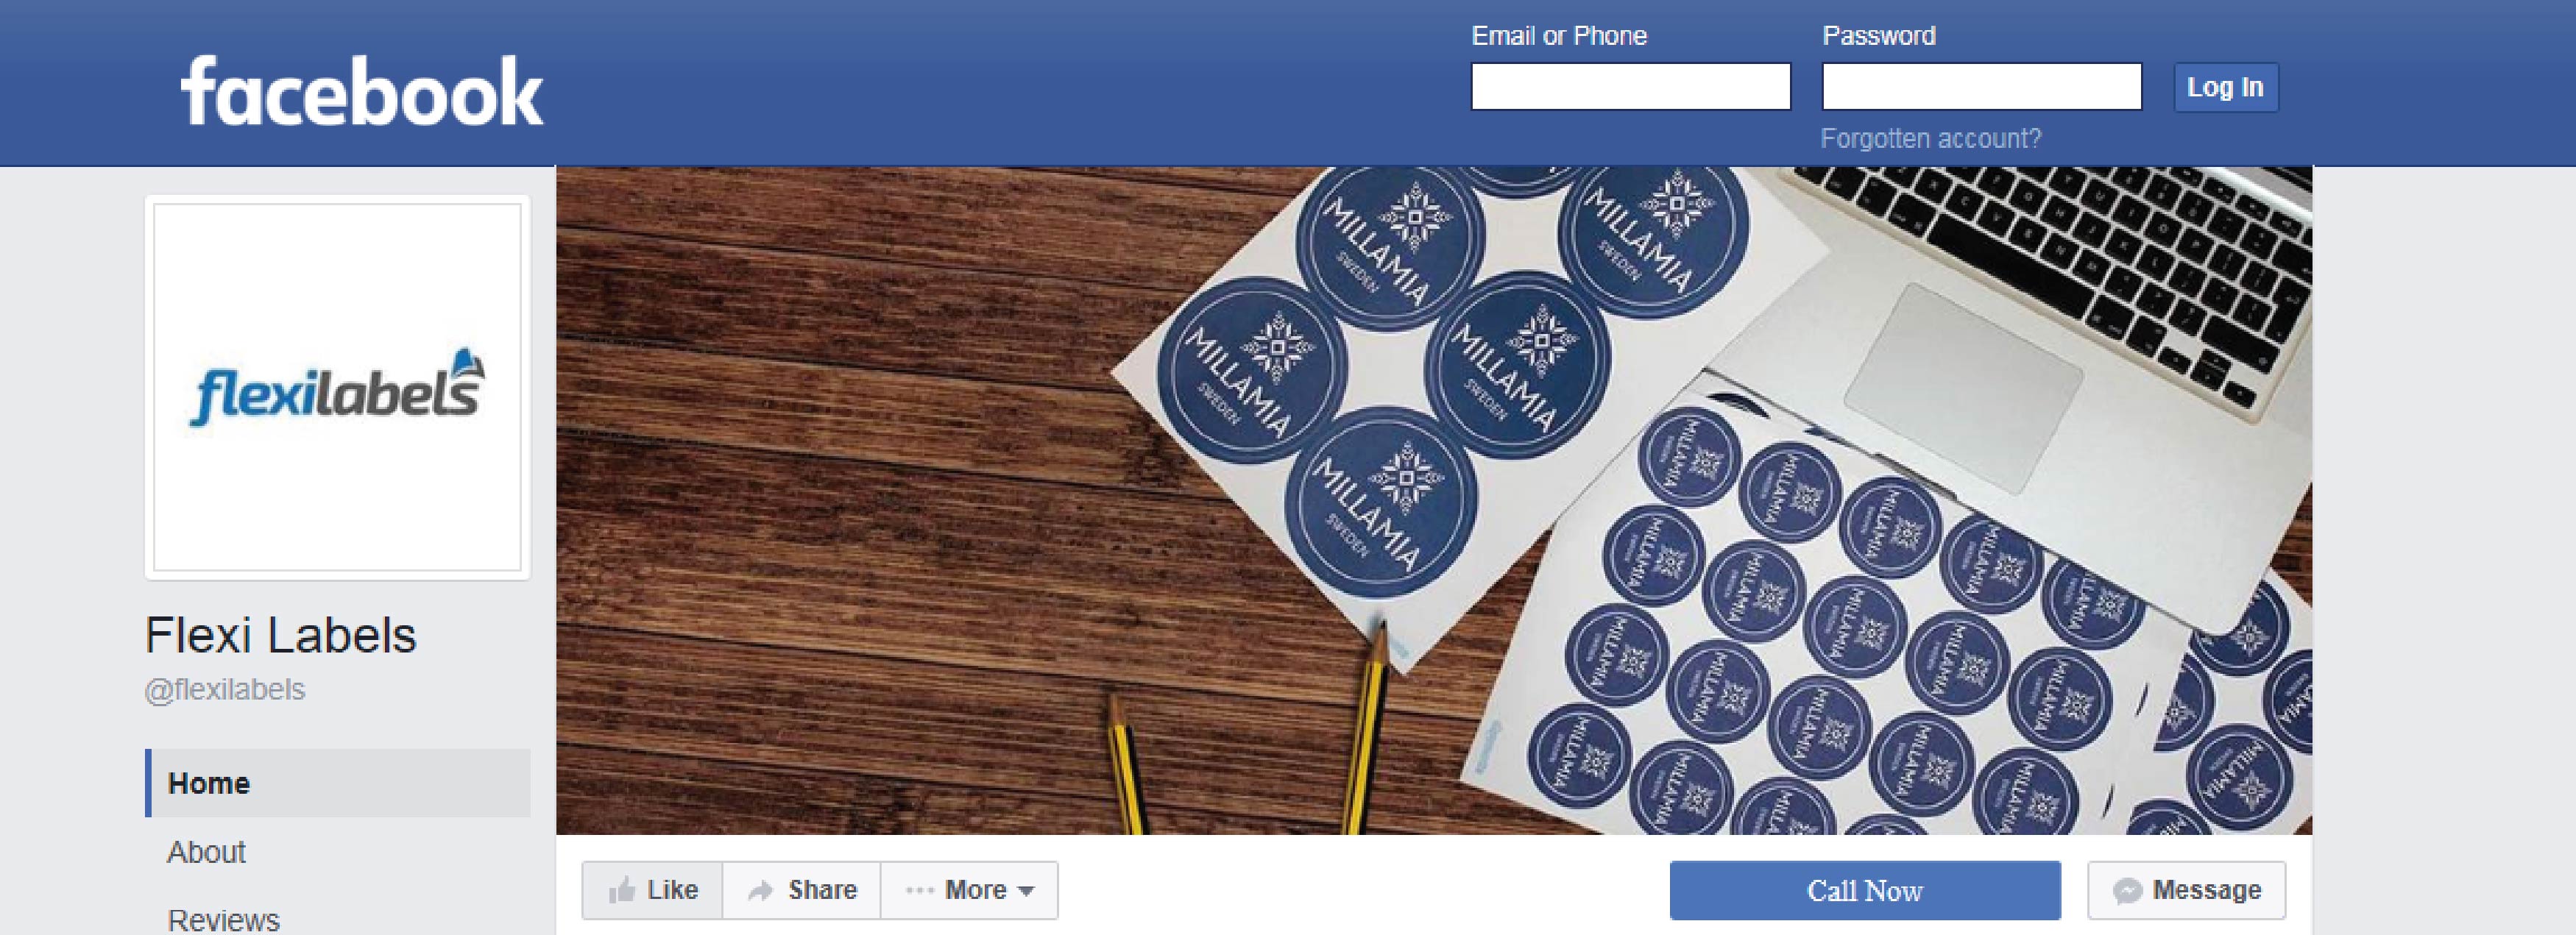 Follow Flexi Labels on Facebook!